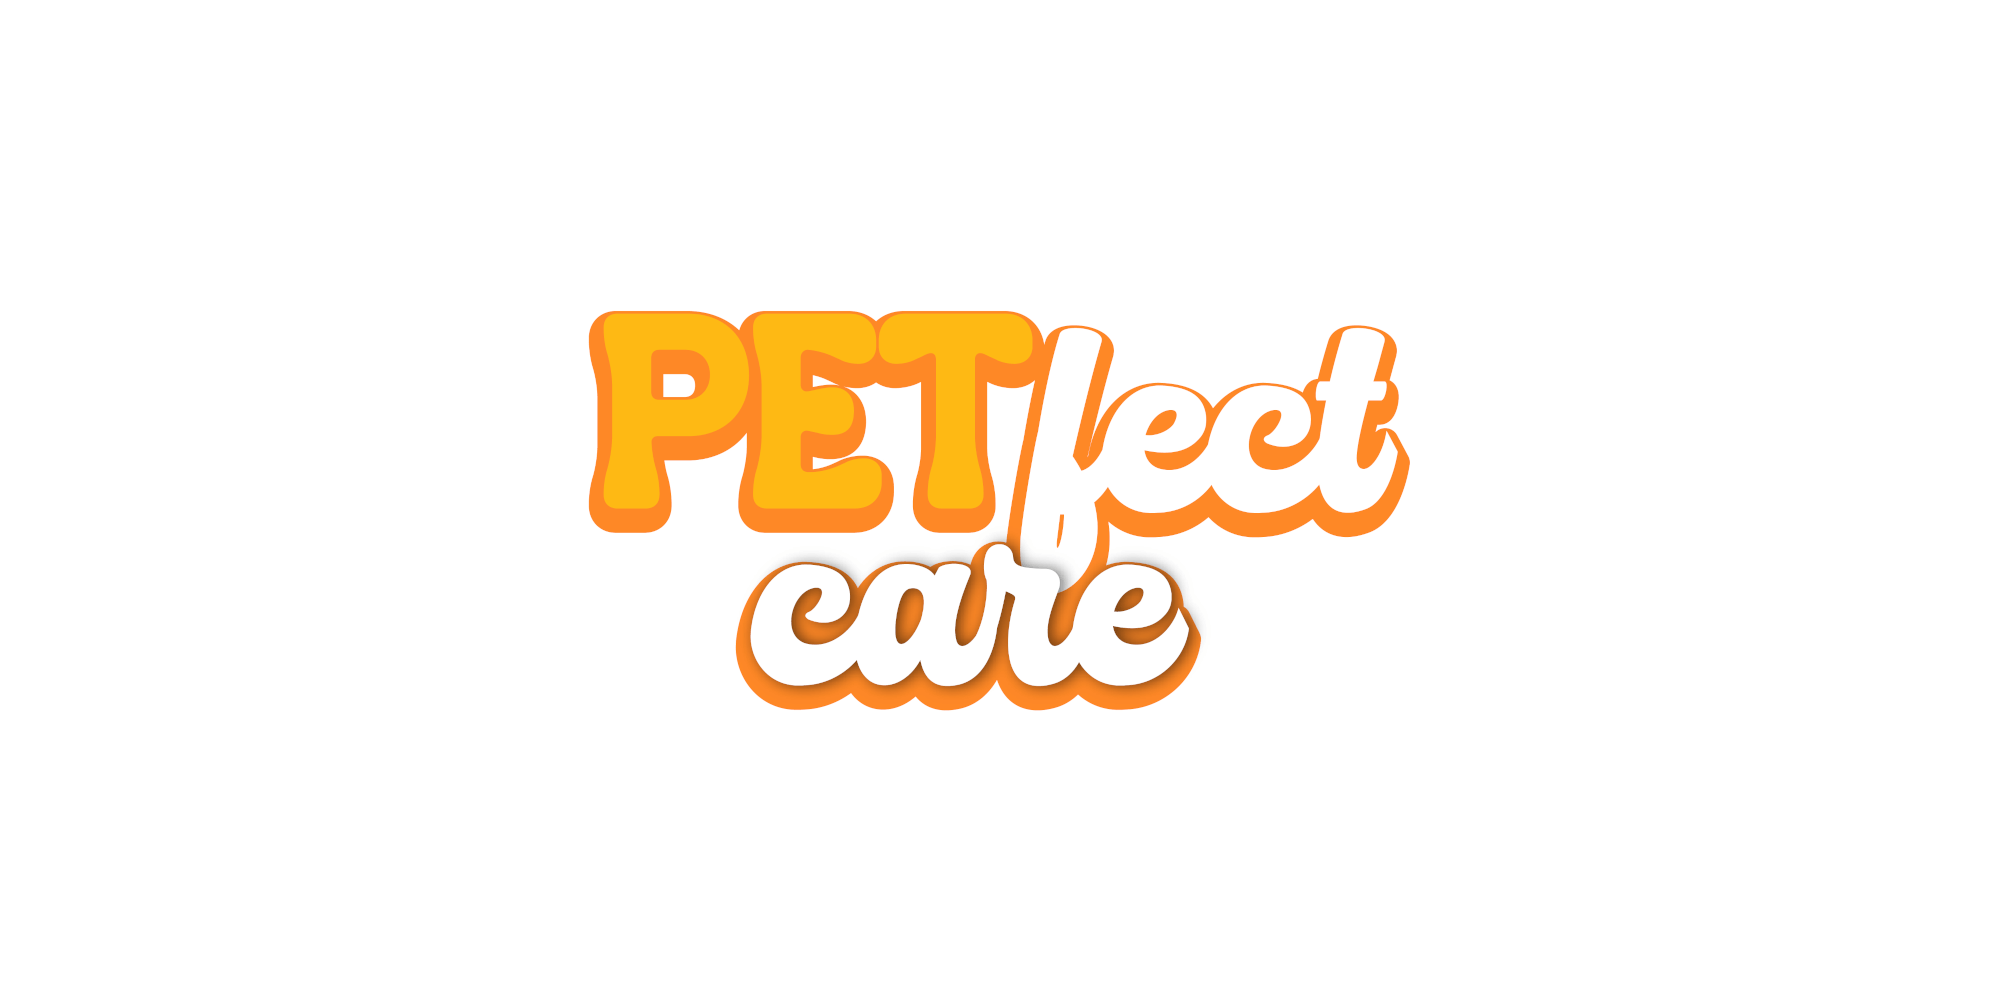 petfect-care-logo-summary